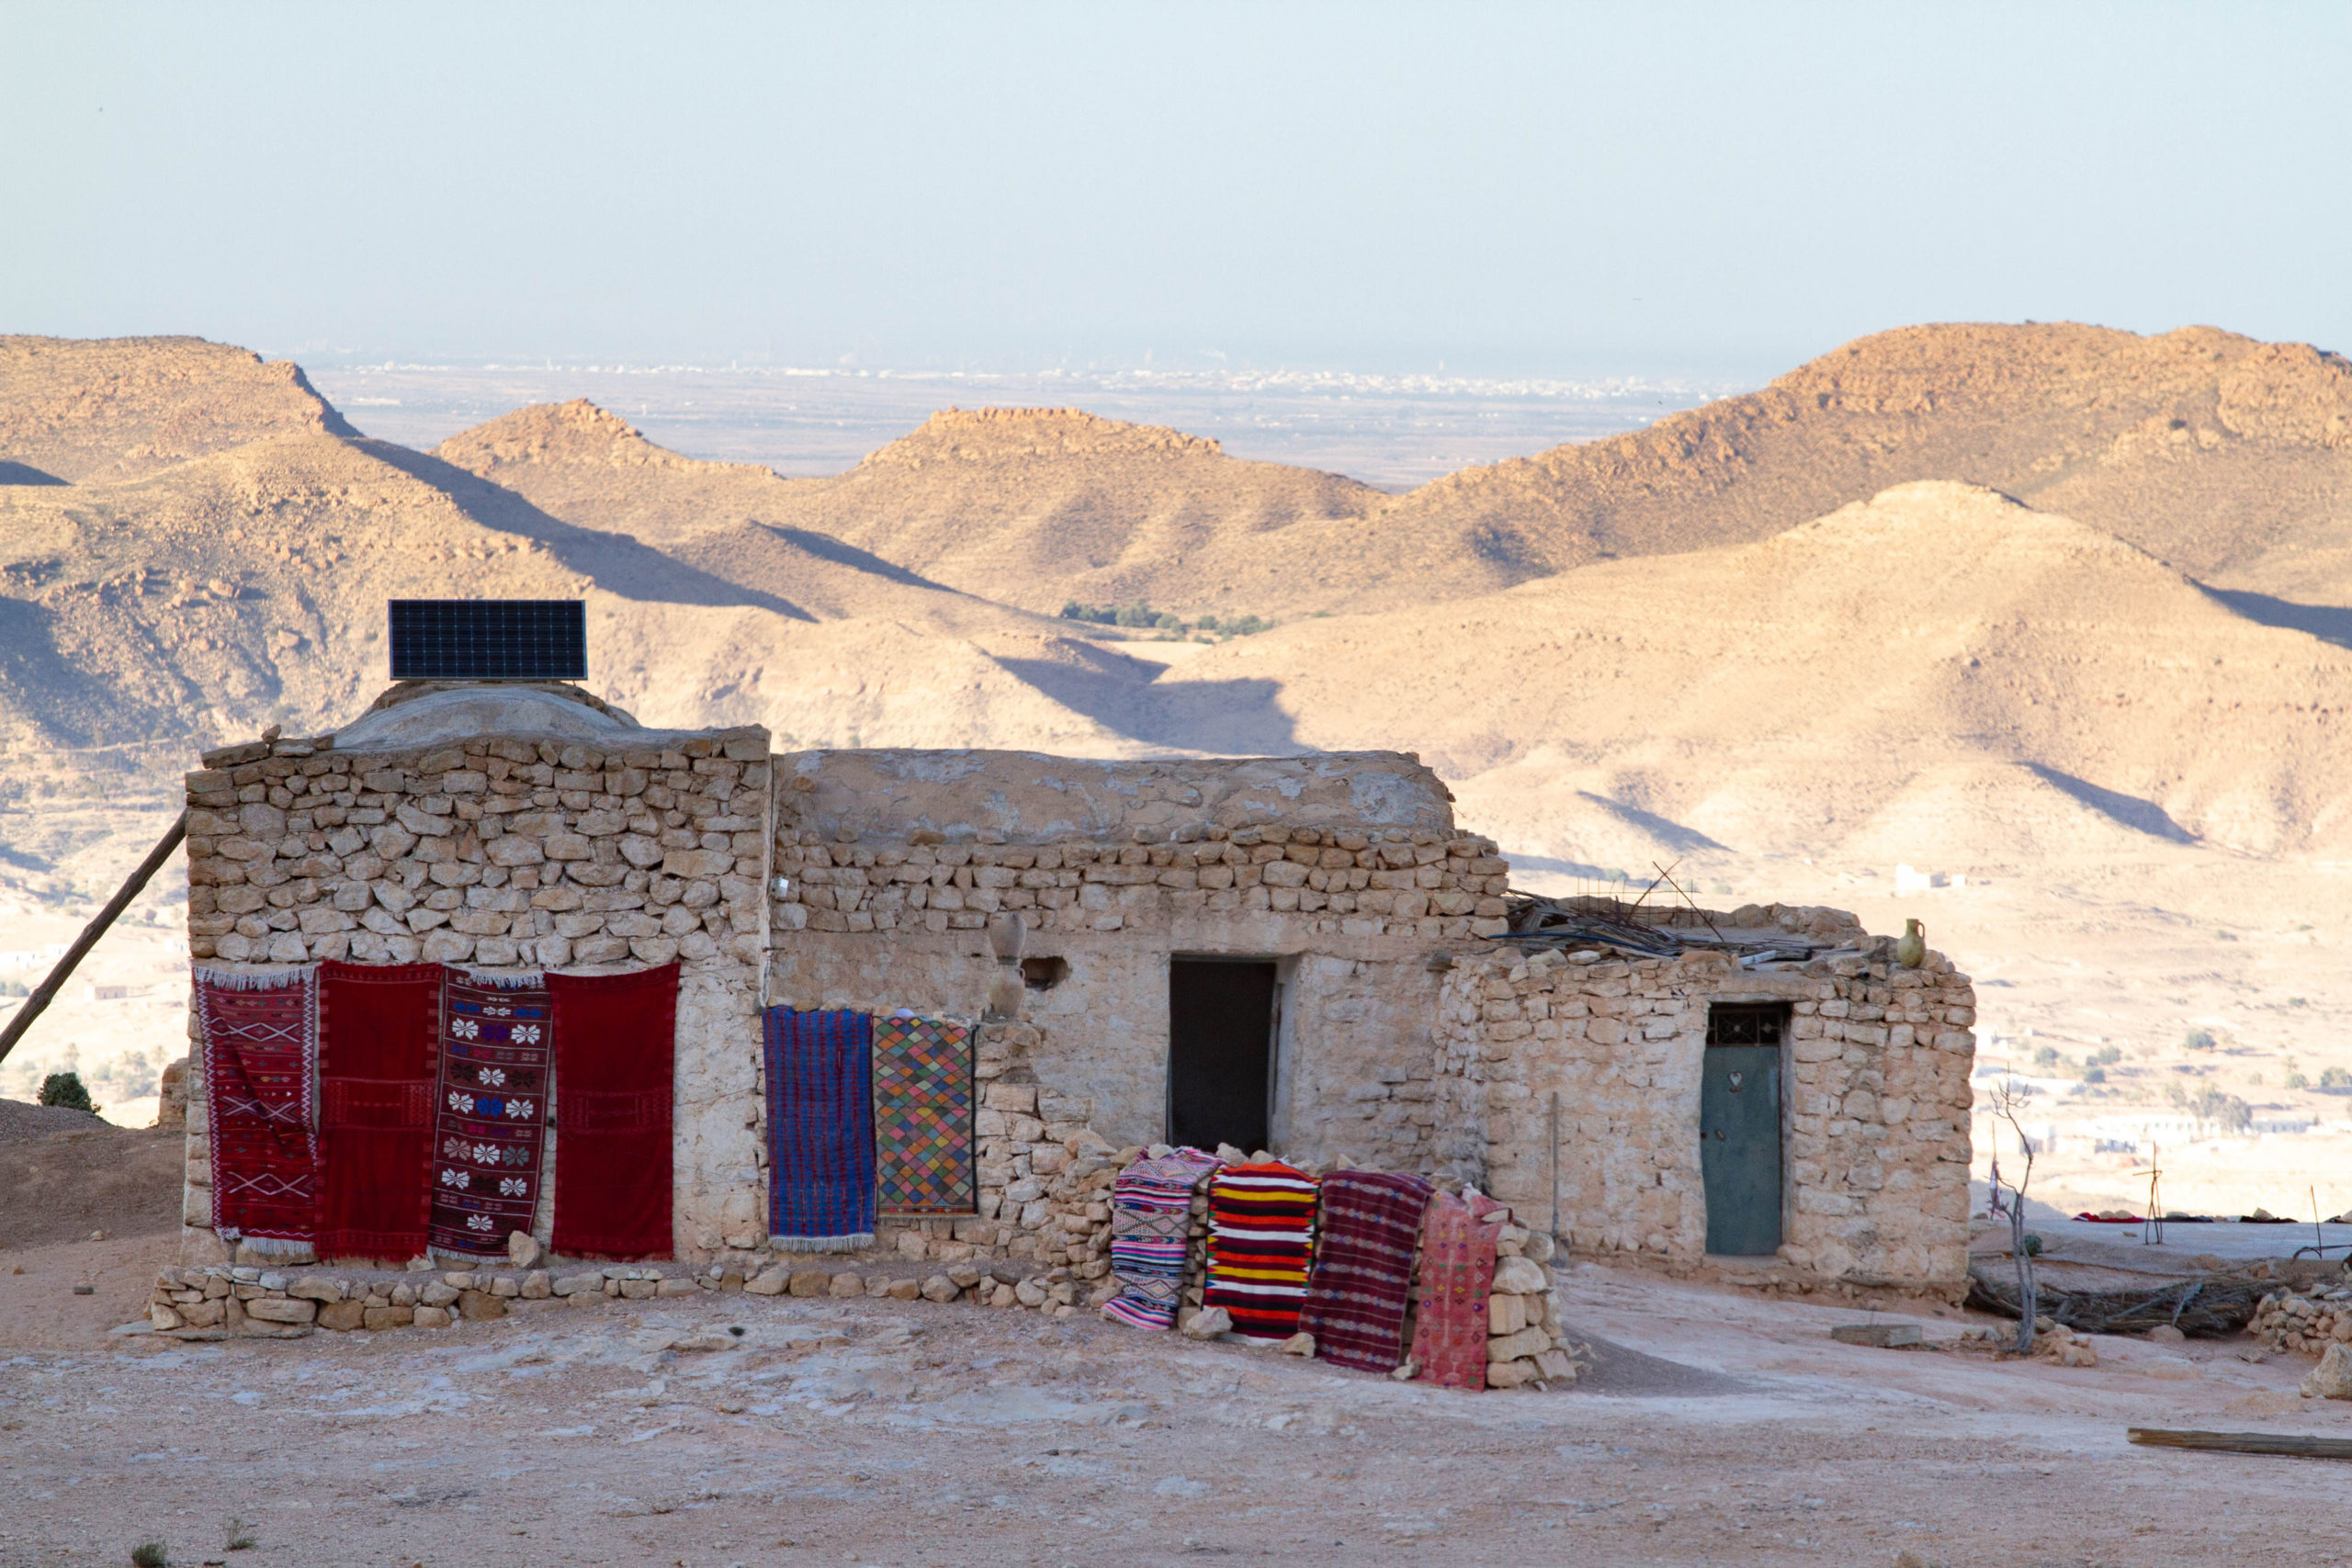 A rug shop along the road in the Sahara Desert of Tunisia.